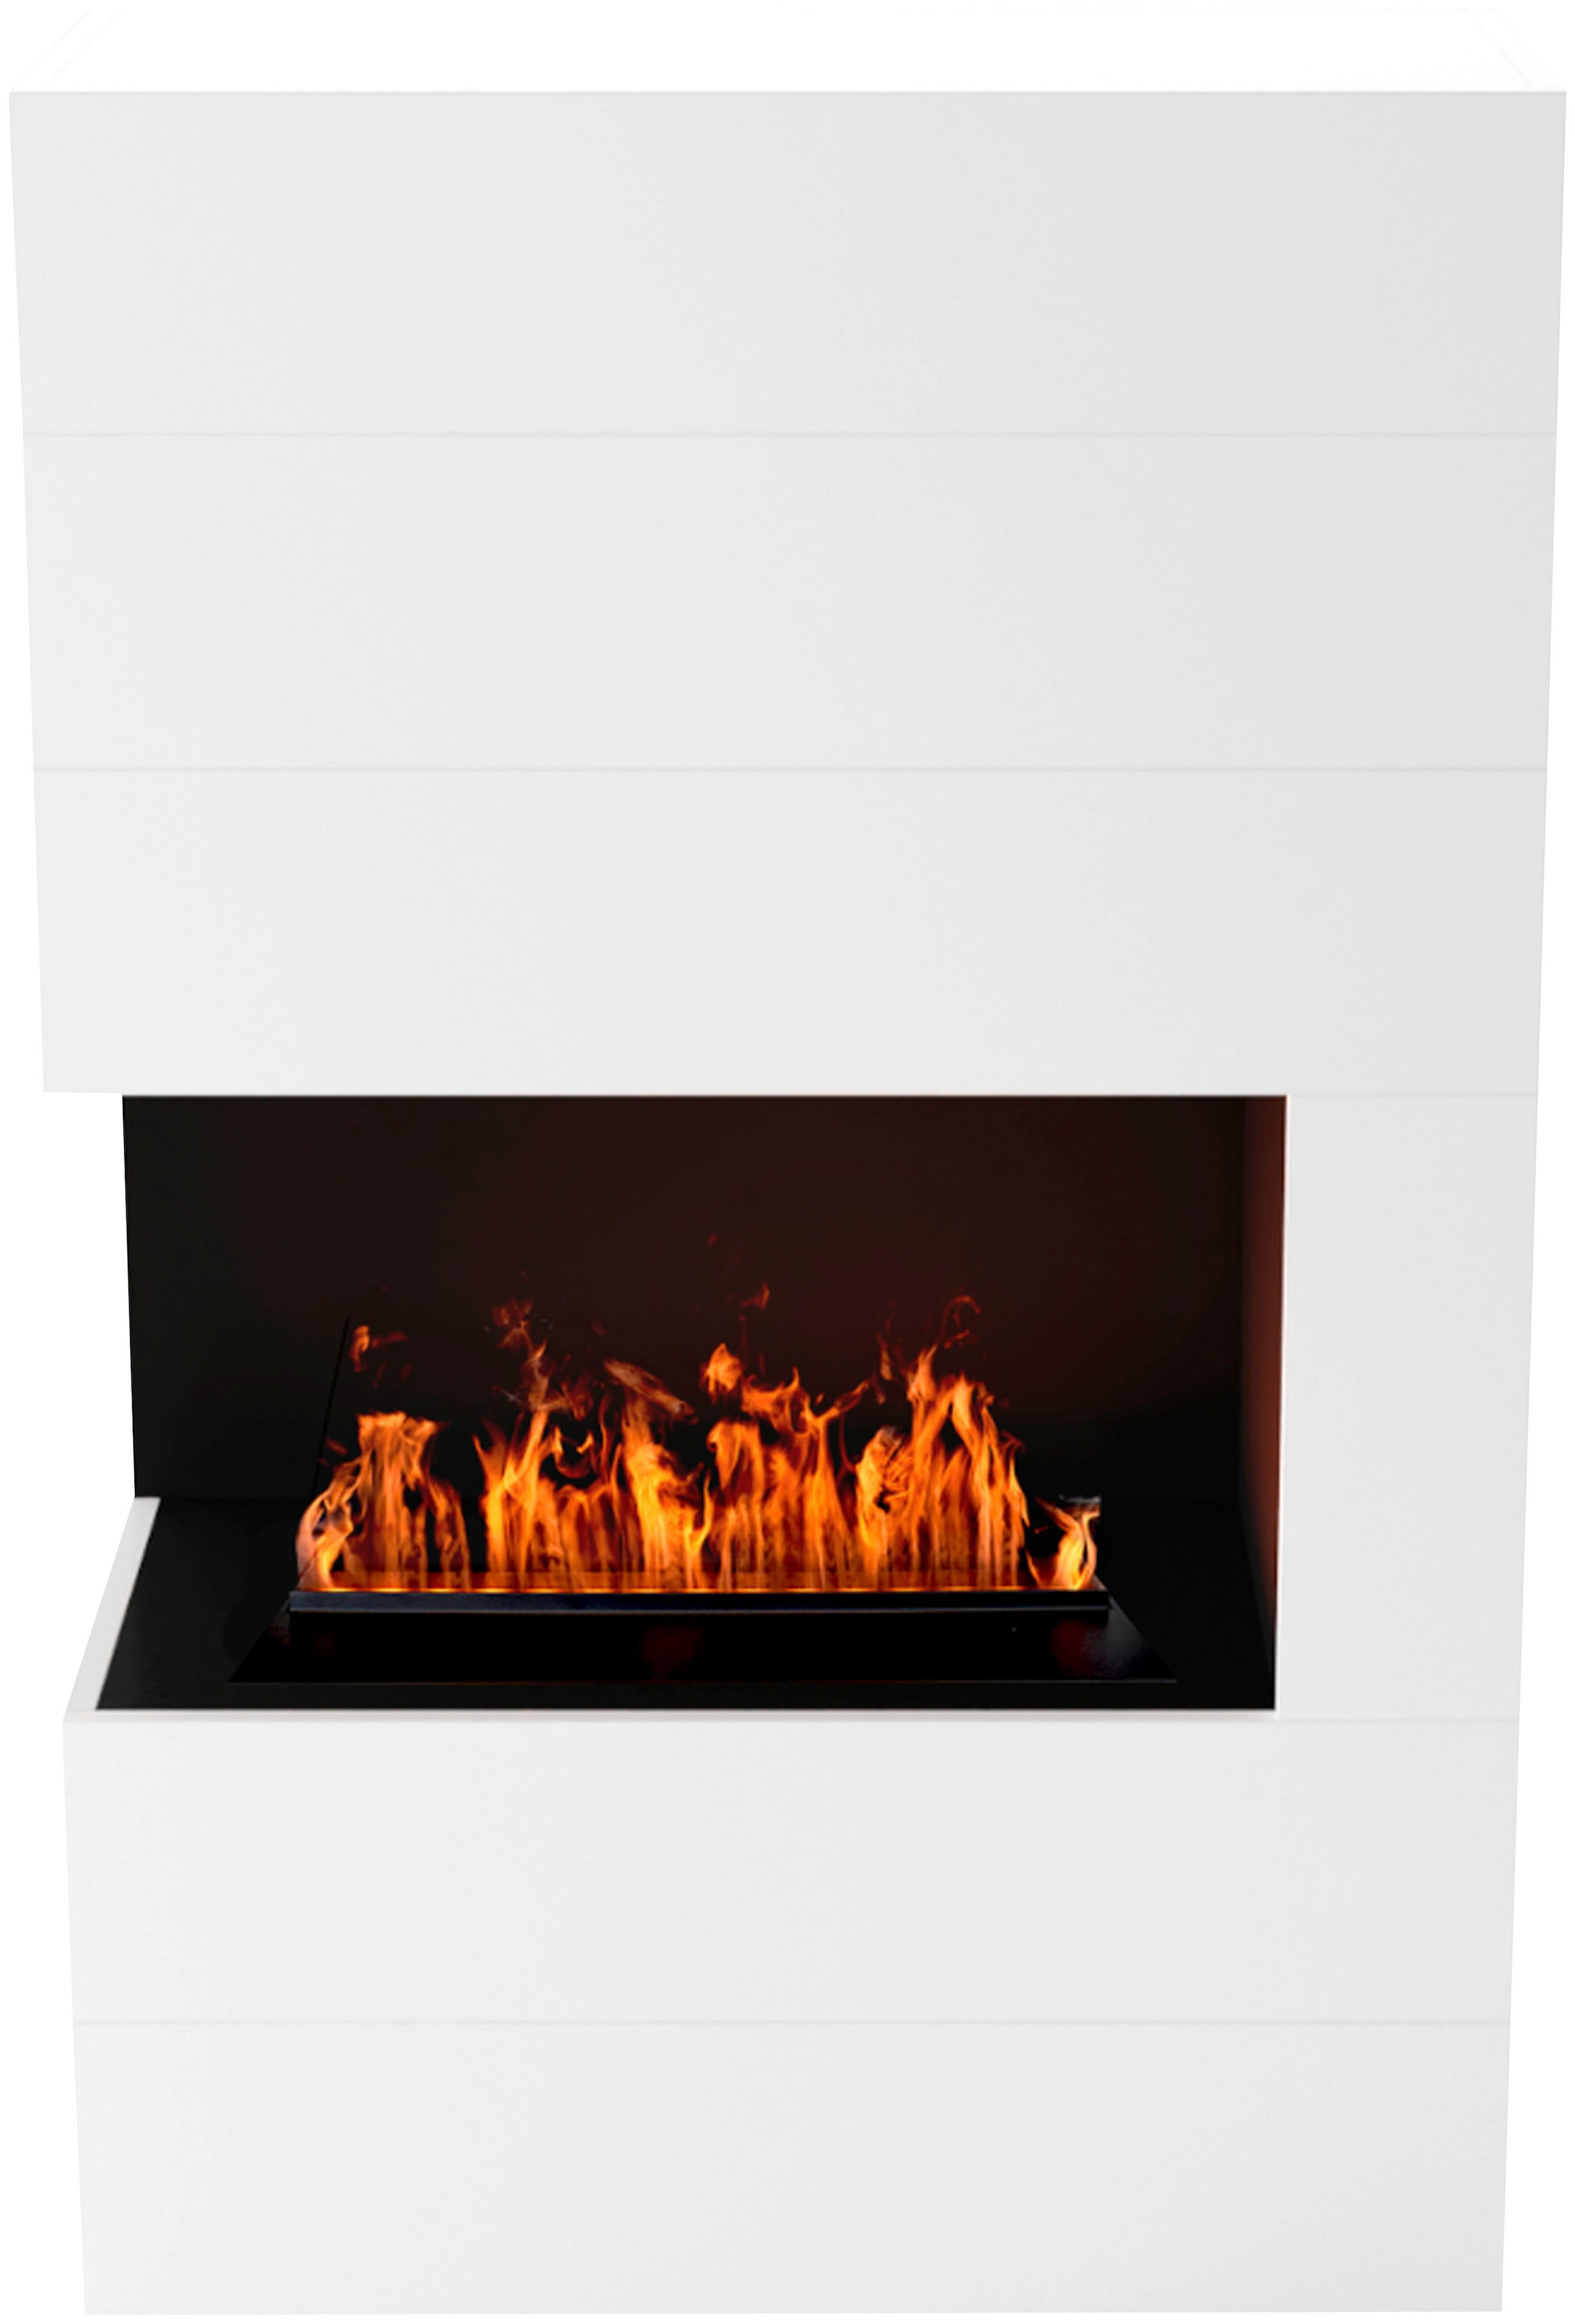 GLOW FIRE Elektrokamin »»Tucholsky, Iinks offen««, Wasserdampfkamin mit 3D Feuer mit integriertem Knistereffekt